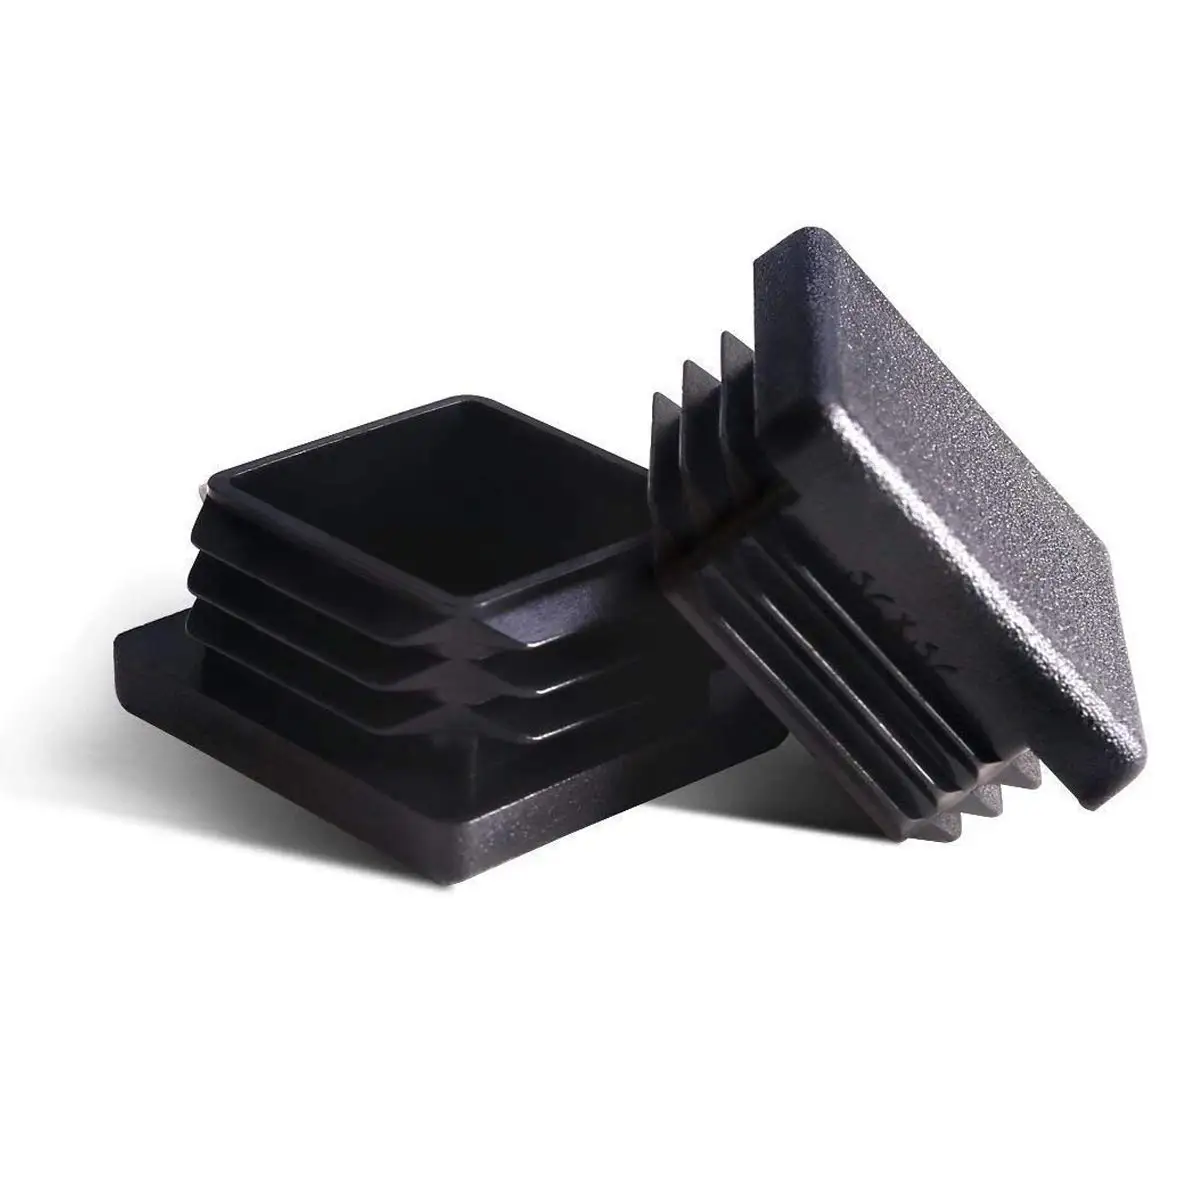 8.95. 6 Pack - 1 1/2 inch Square Tubing Black Plastic Plug, 1.5" Pipe Plug...